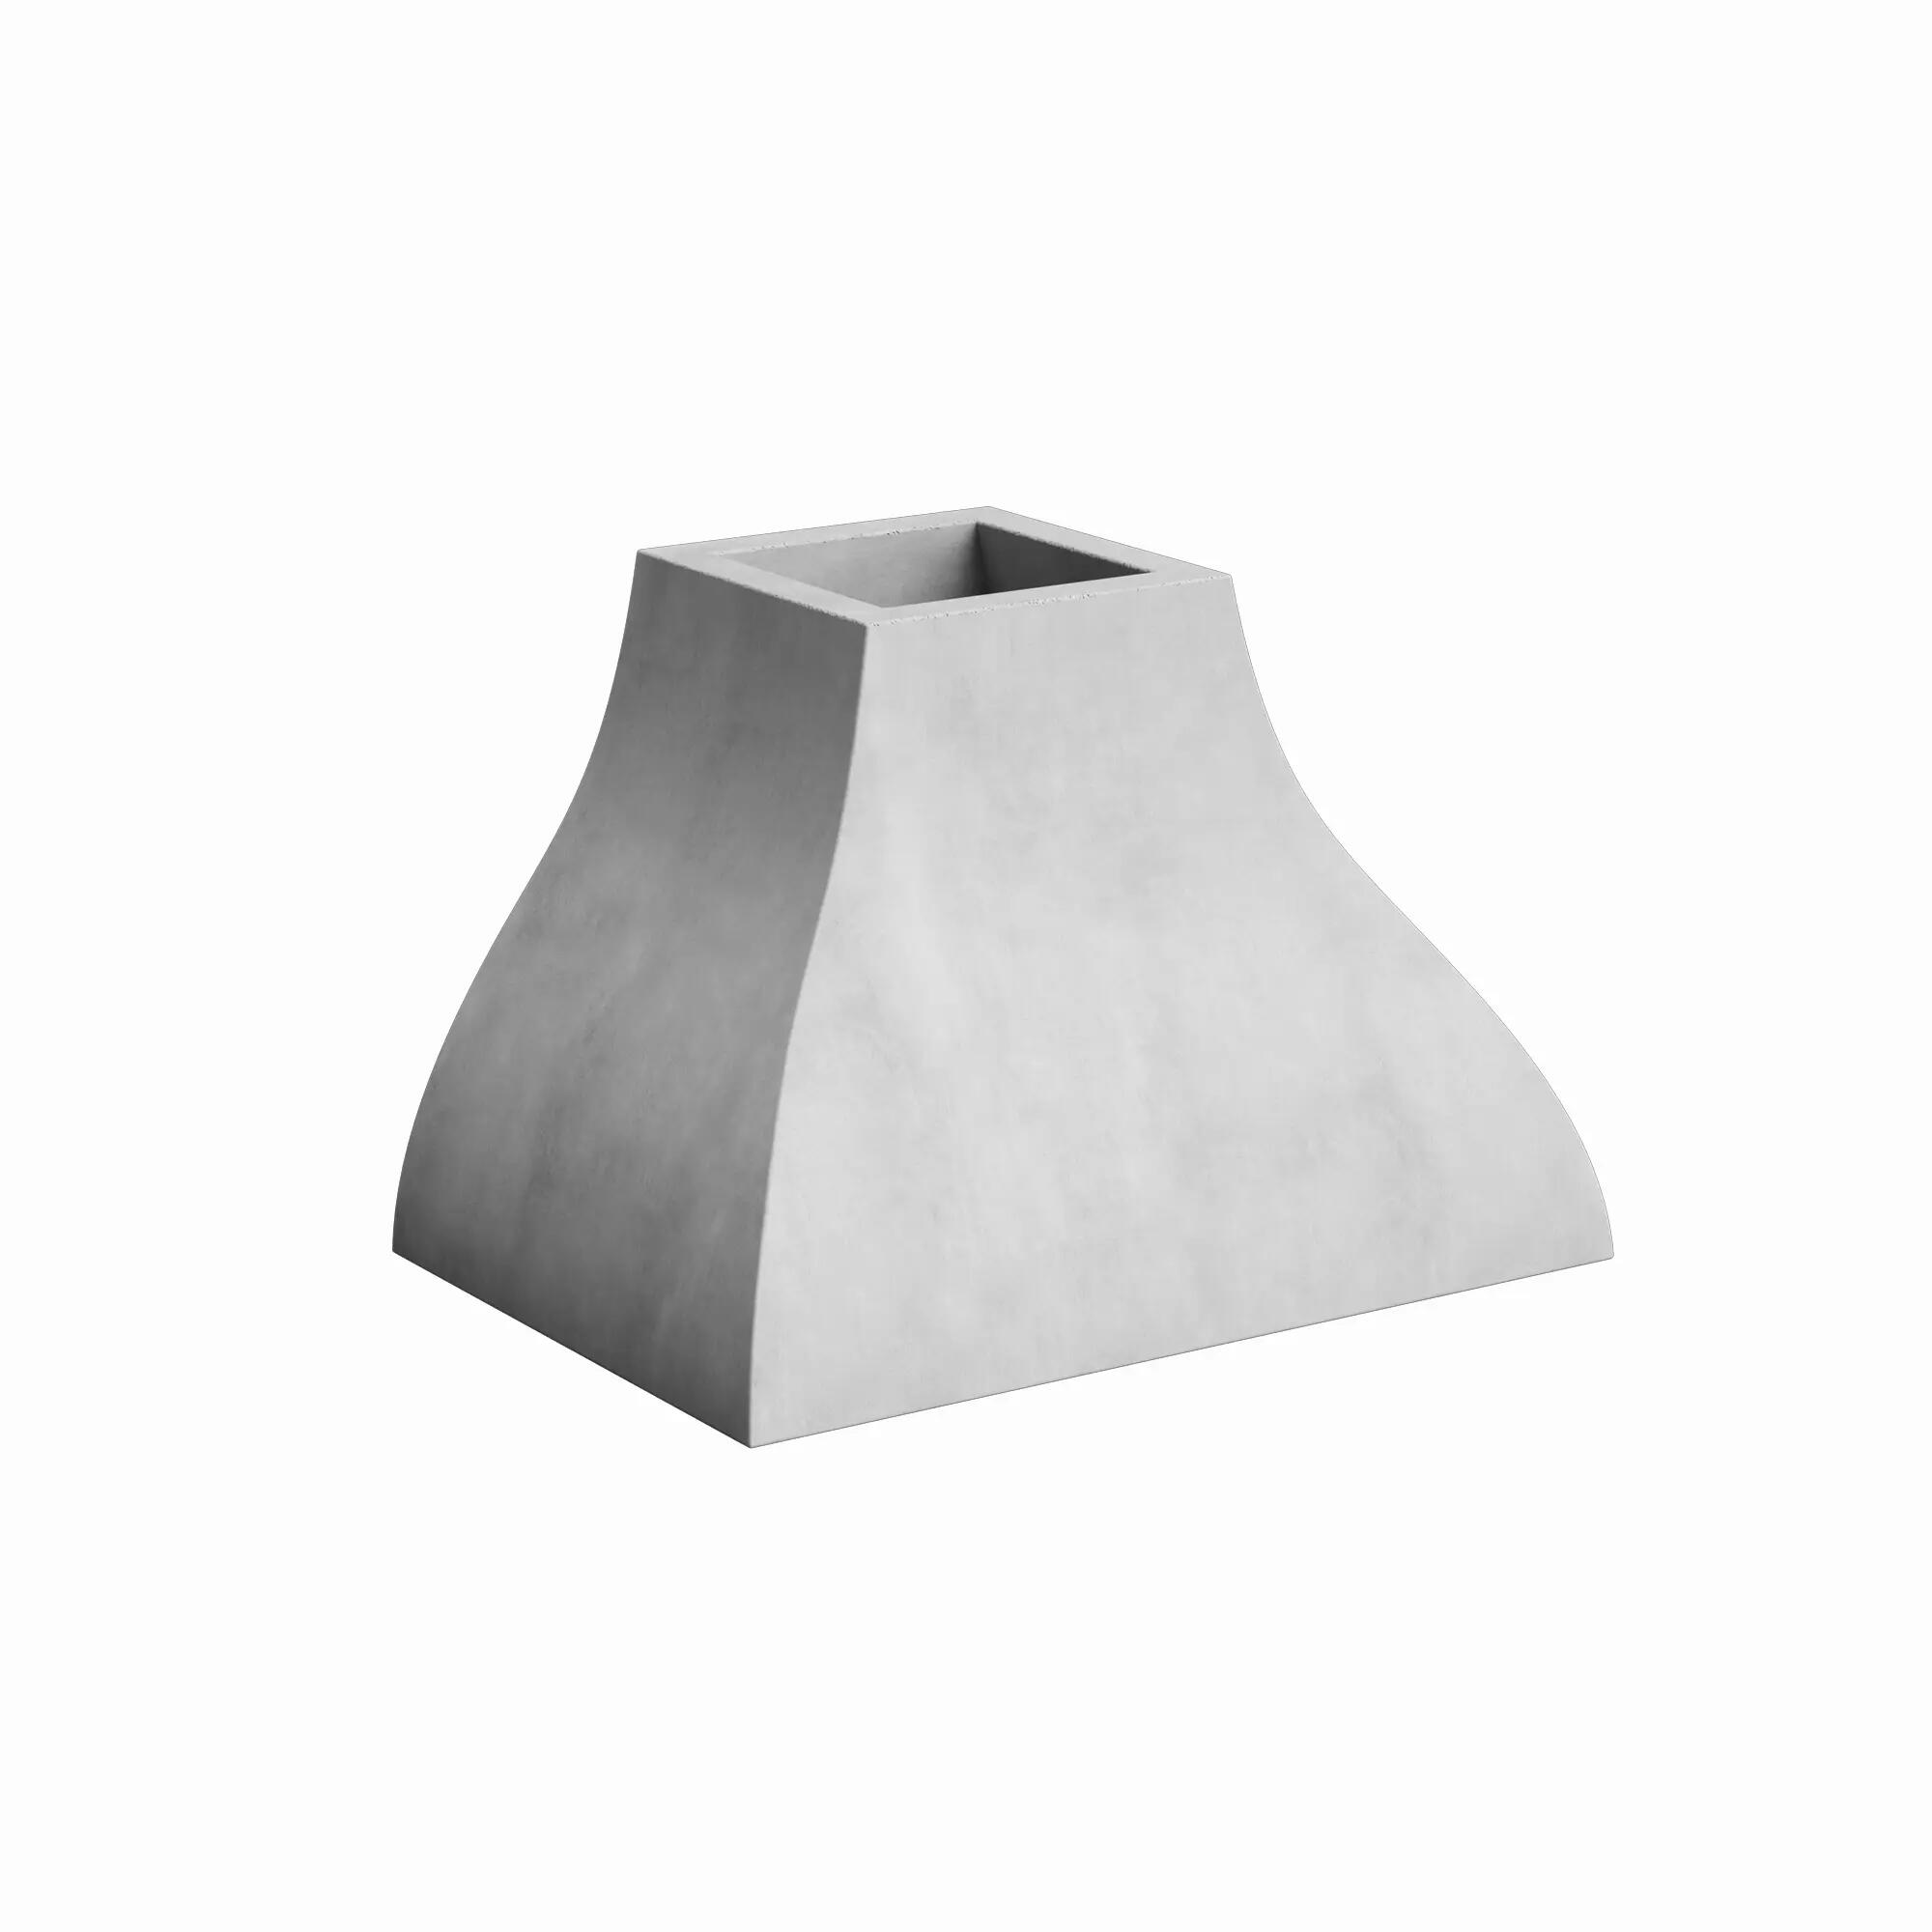 Campana de hormigón gris para barbacoa de obra M 50x74x50 cm